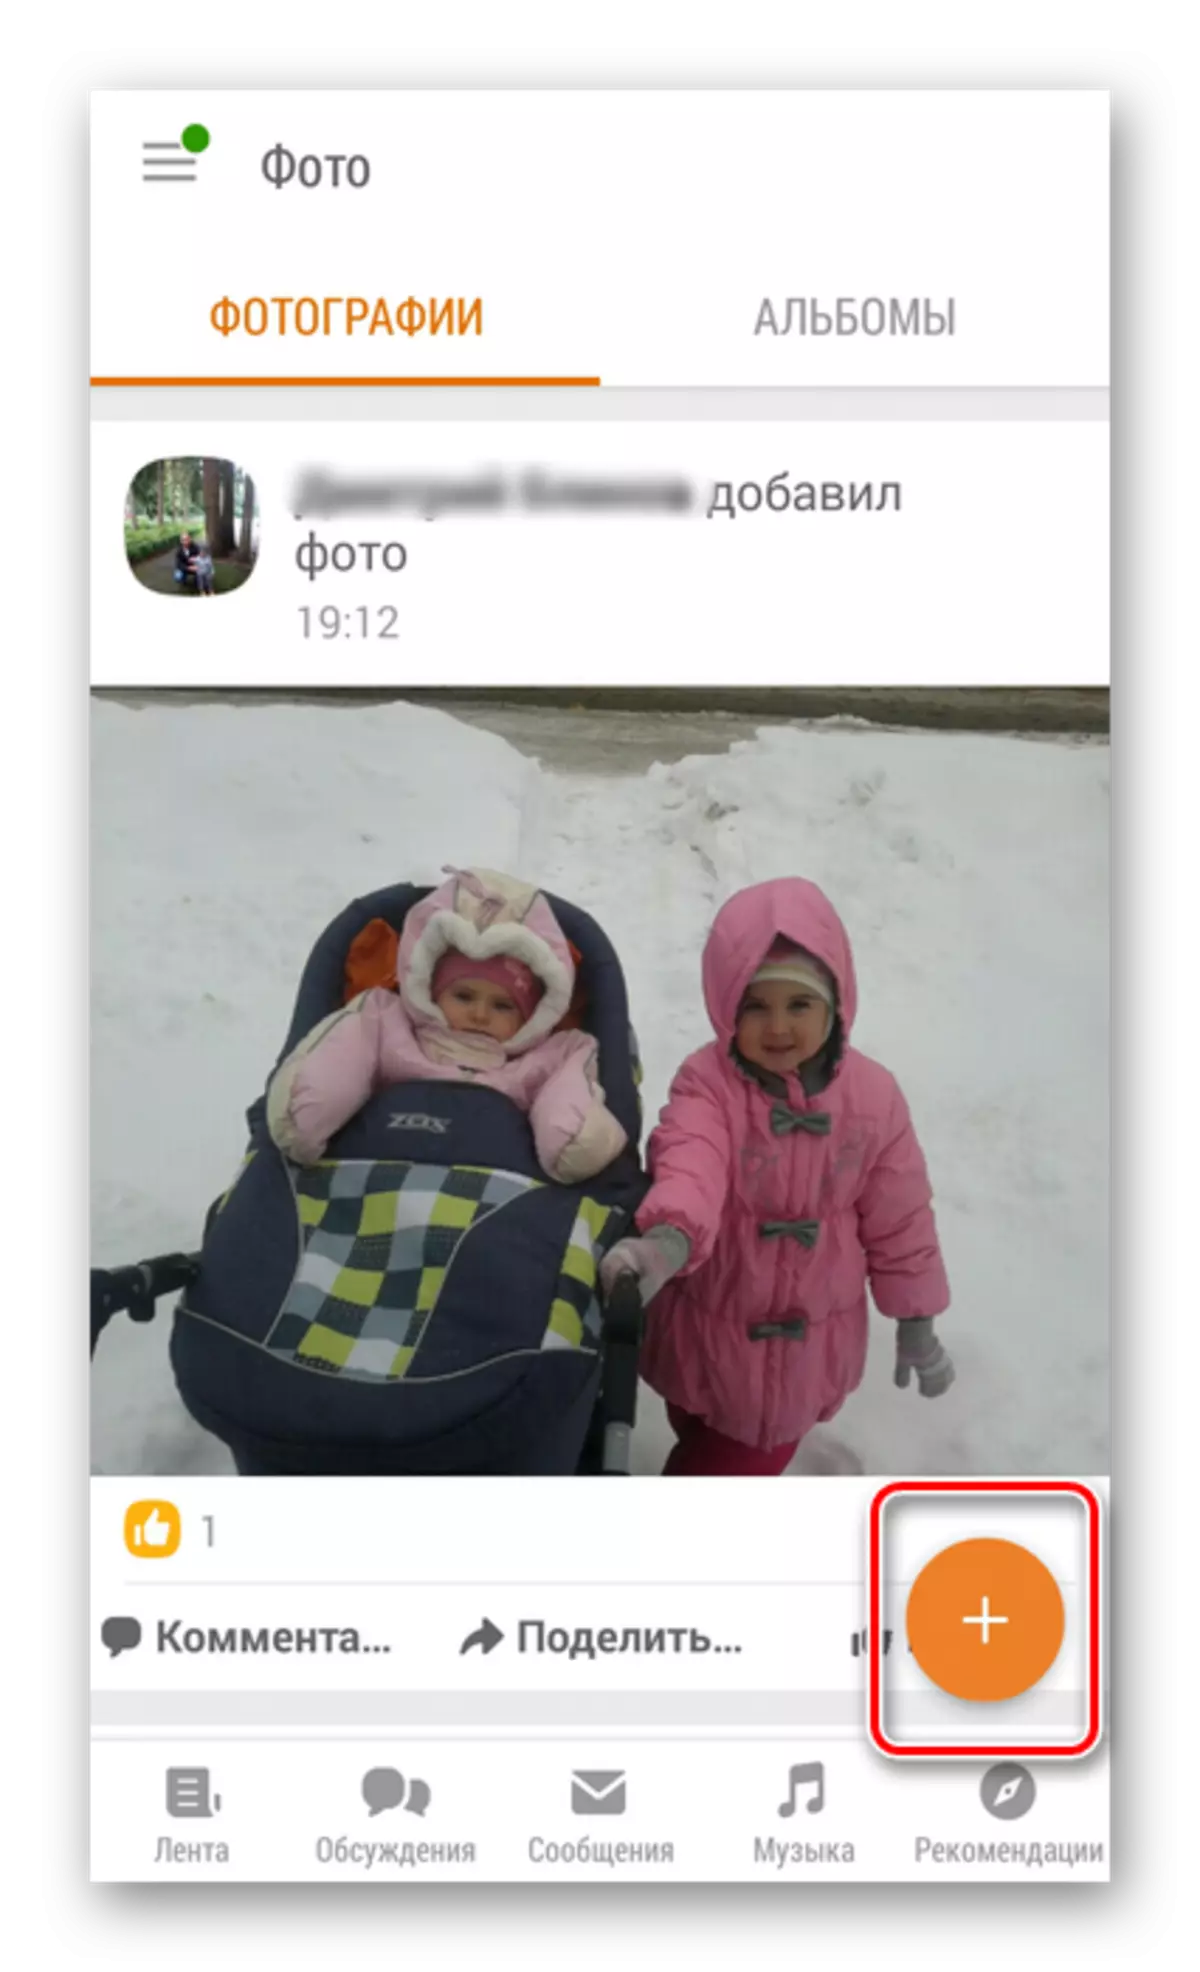 Tambah foto di Lampiran Odnoklassniki